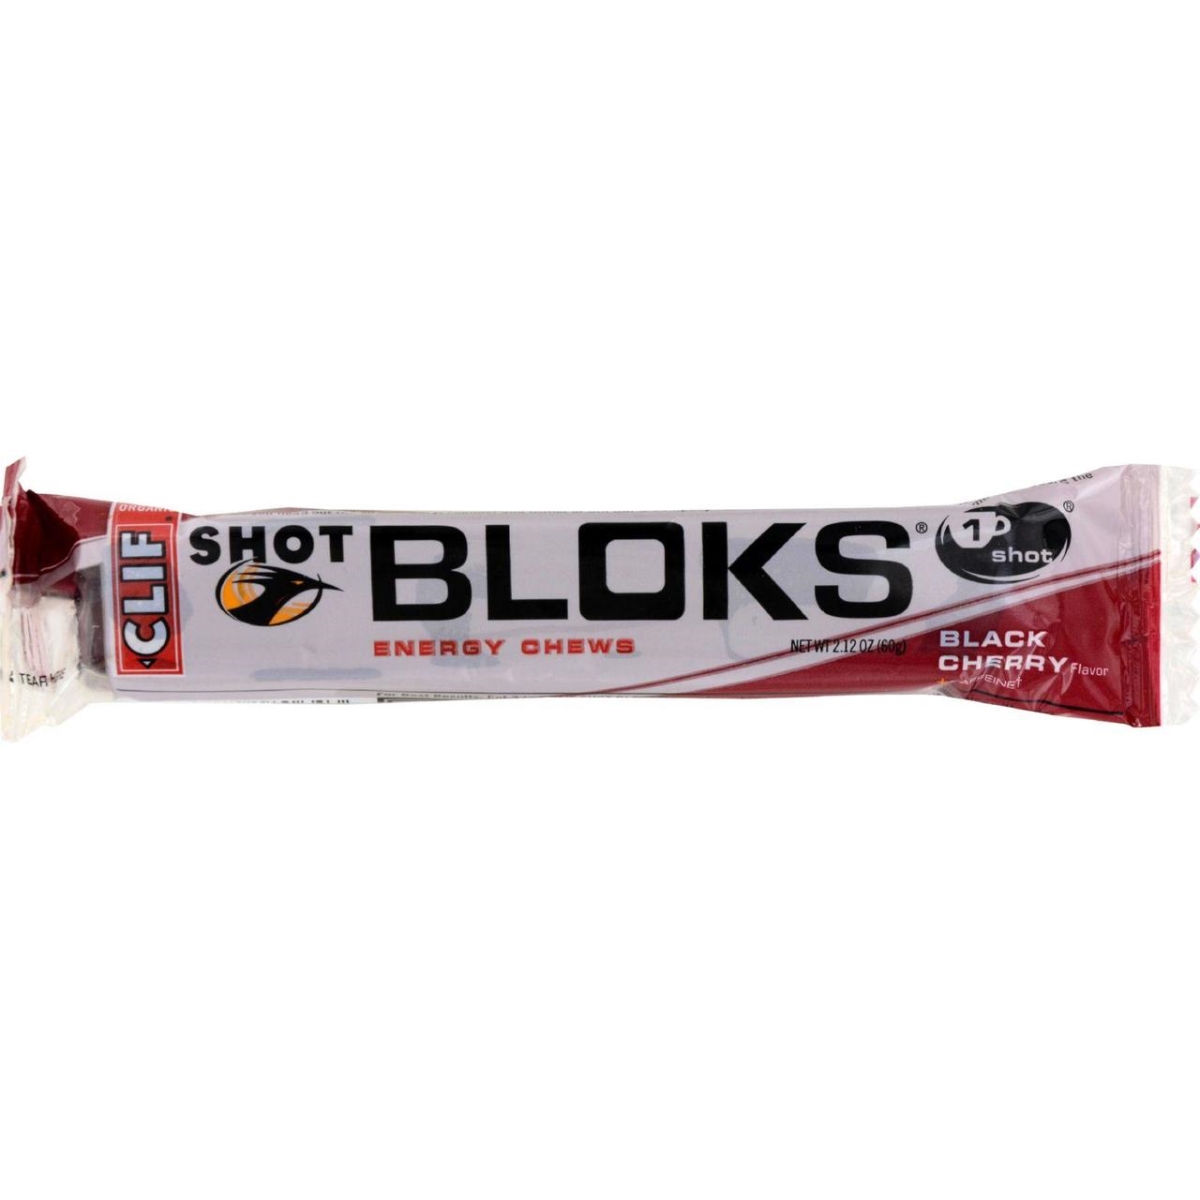 Clif Bar Hg0727321 2.1 Oz Organic Black Cherry Shot Bloks - Case Of 18